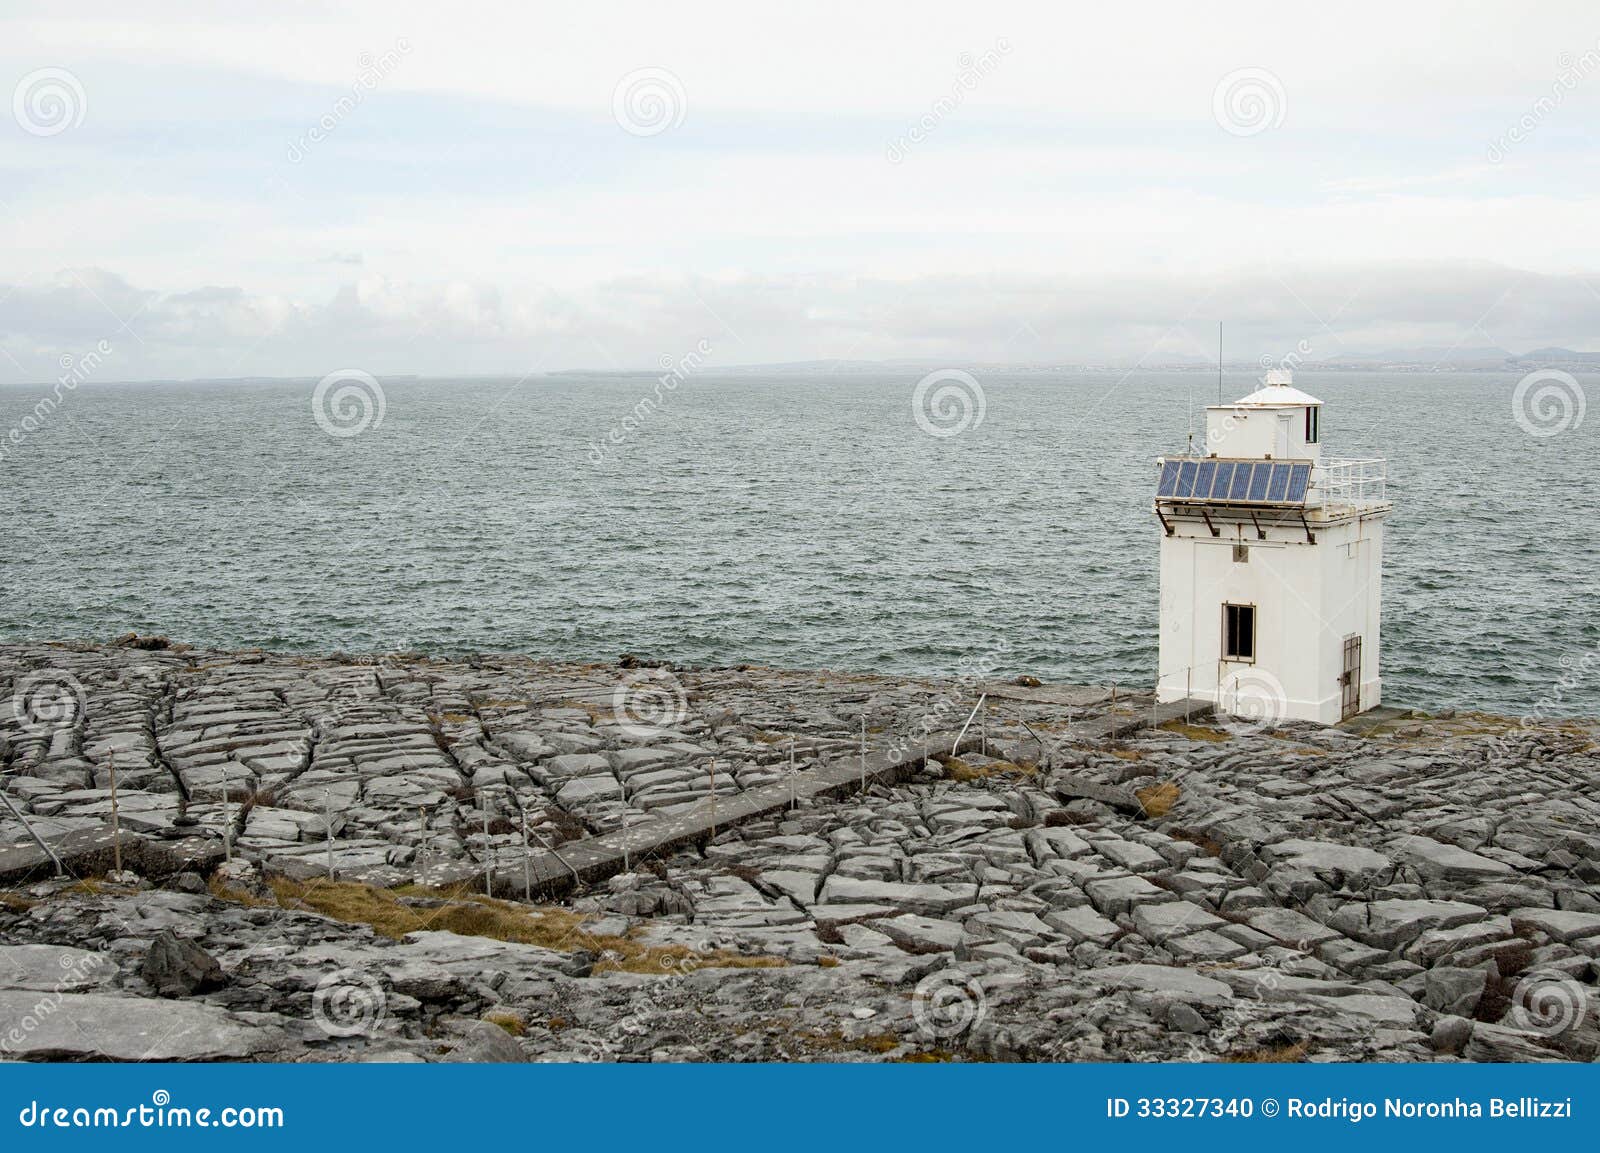 blackhead lighthouse in the burren, co.clare - ireland